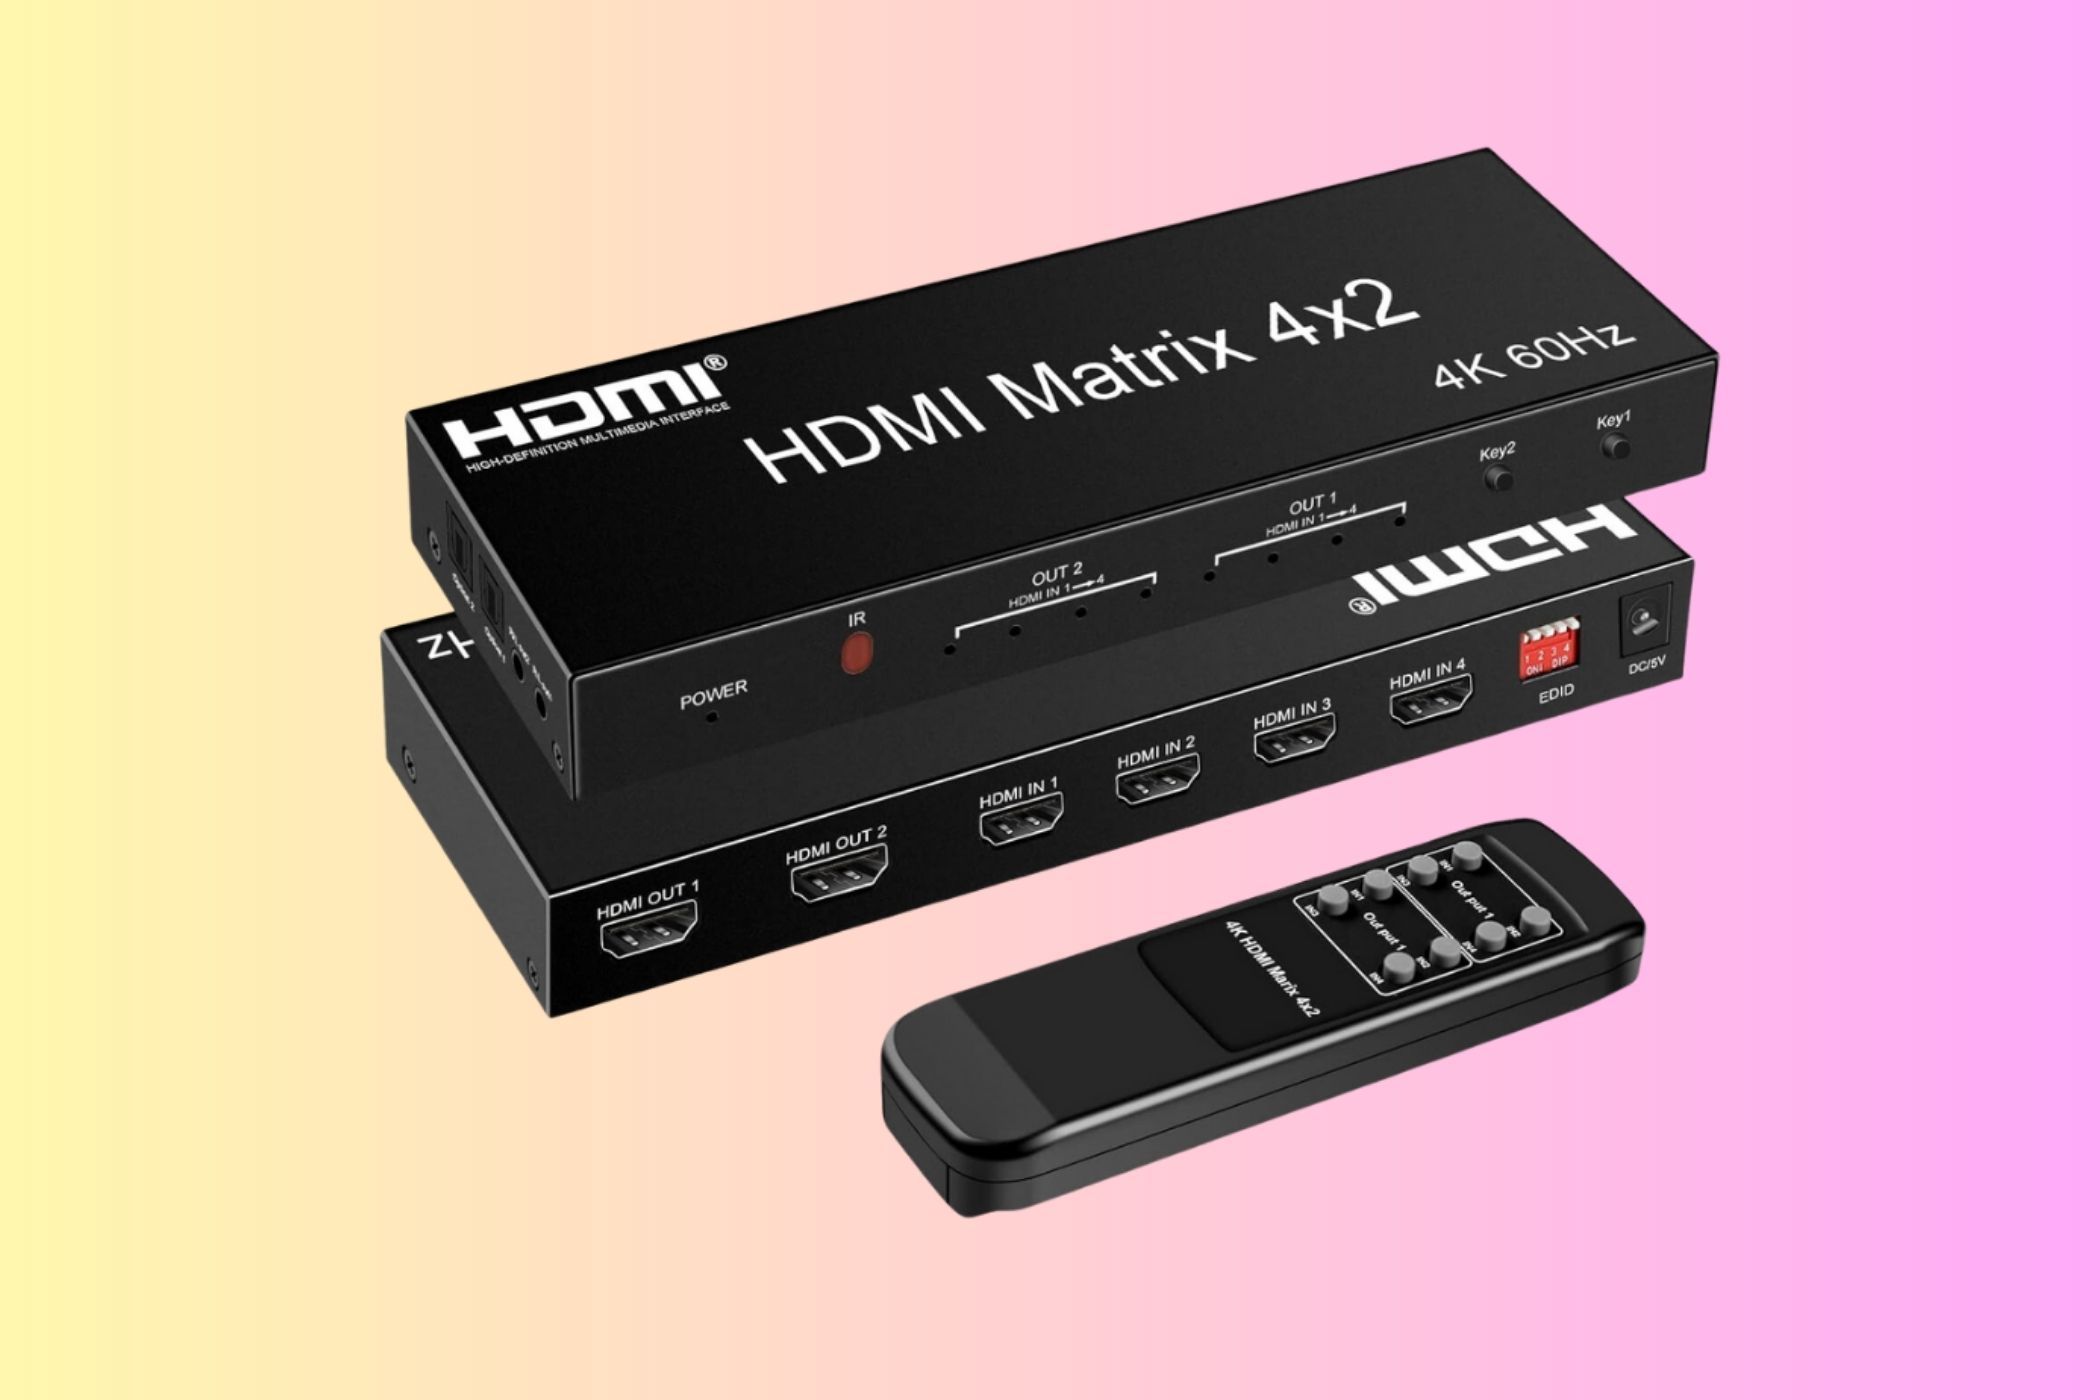 FERRISA 4x2 4K@60Hz HDMI Matrix on yellow and pink background